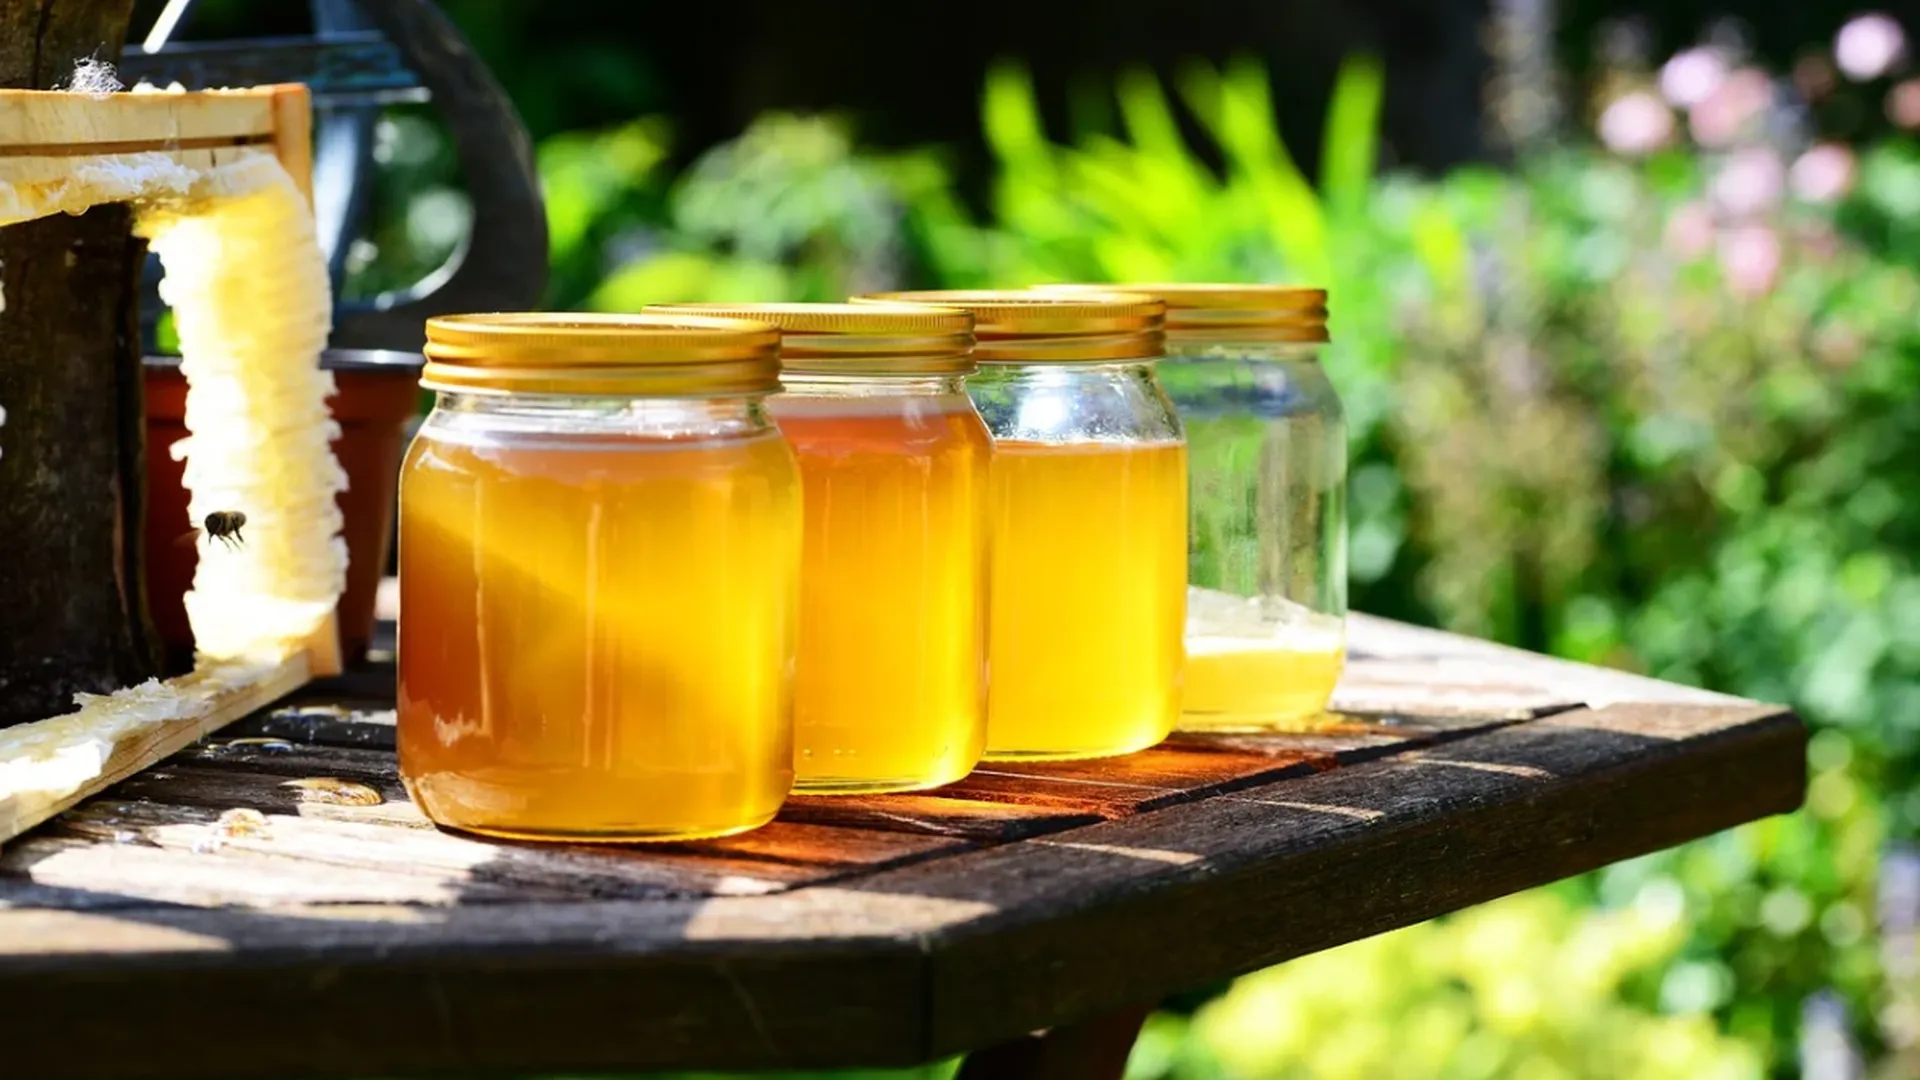 Технолог Третьякова пояснила, как правильно хранить мед